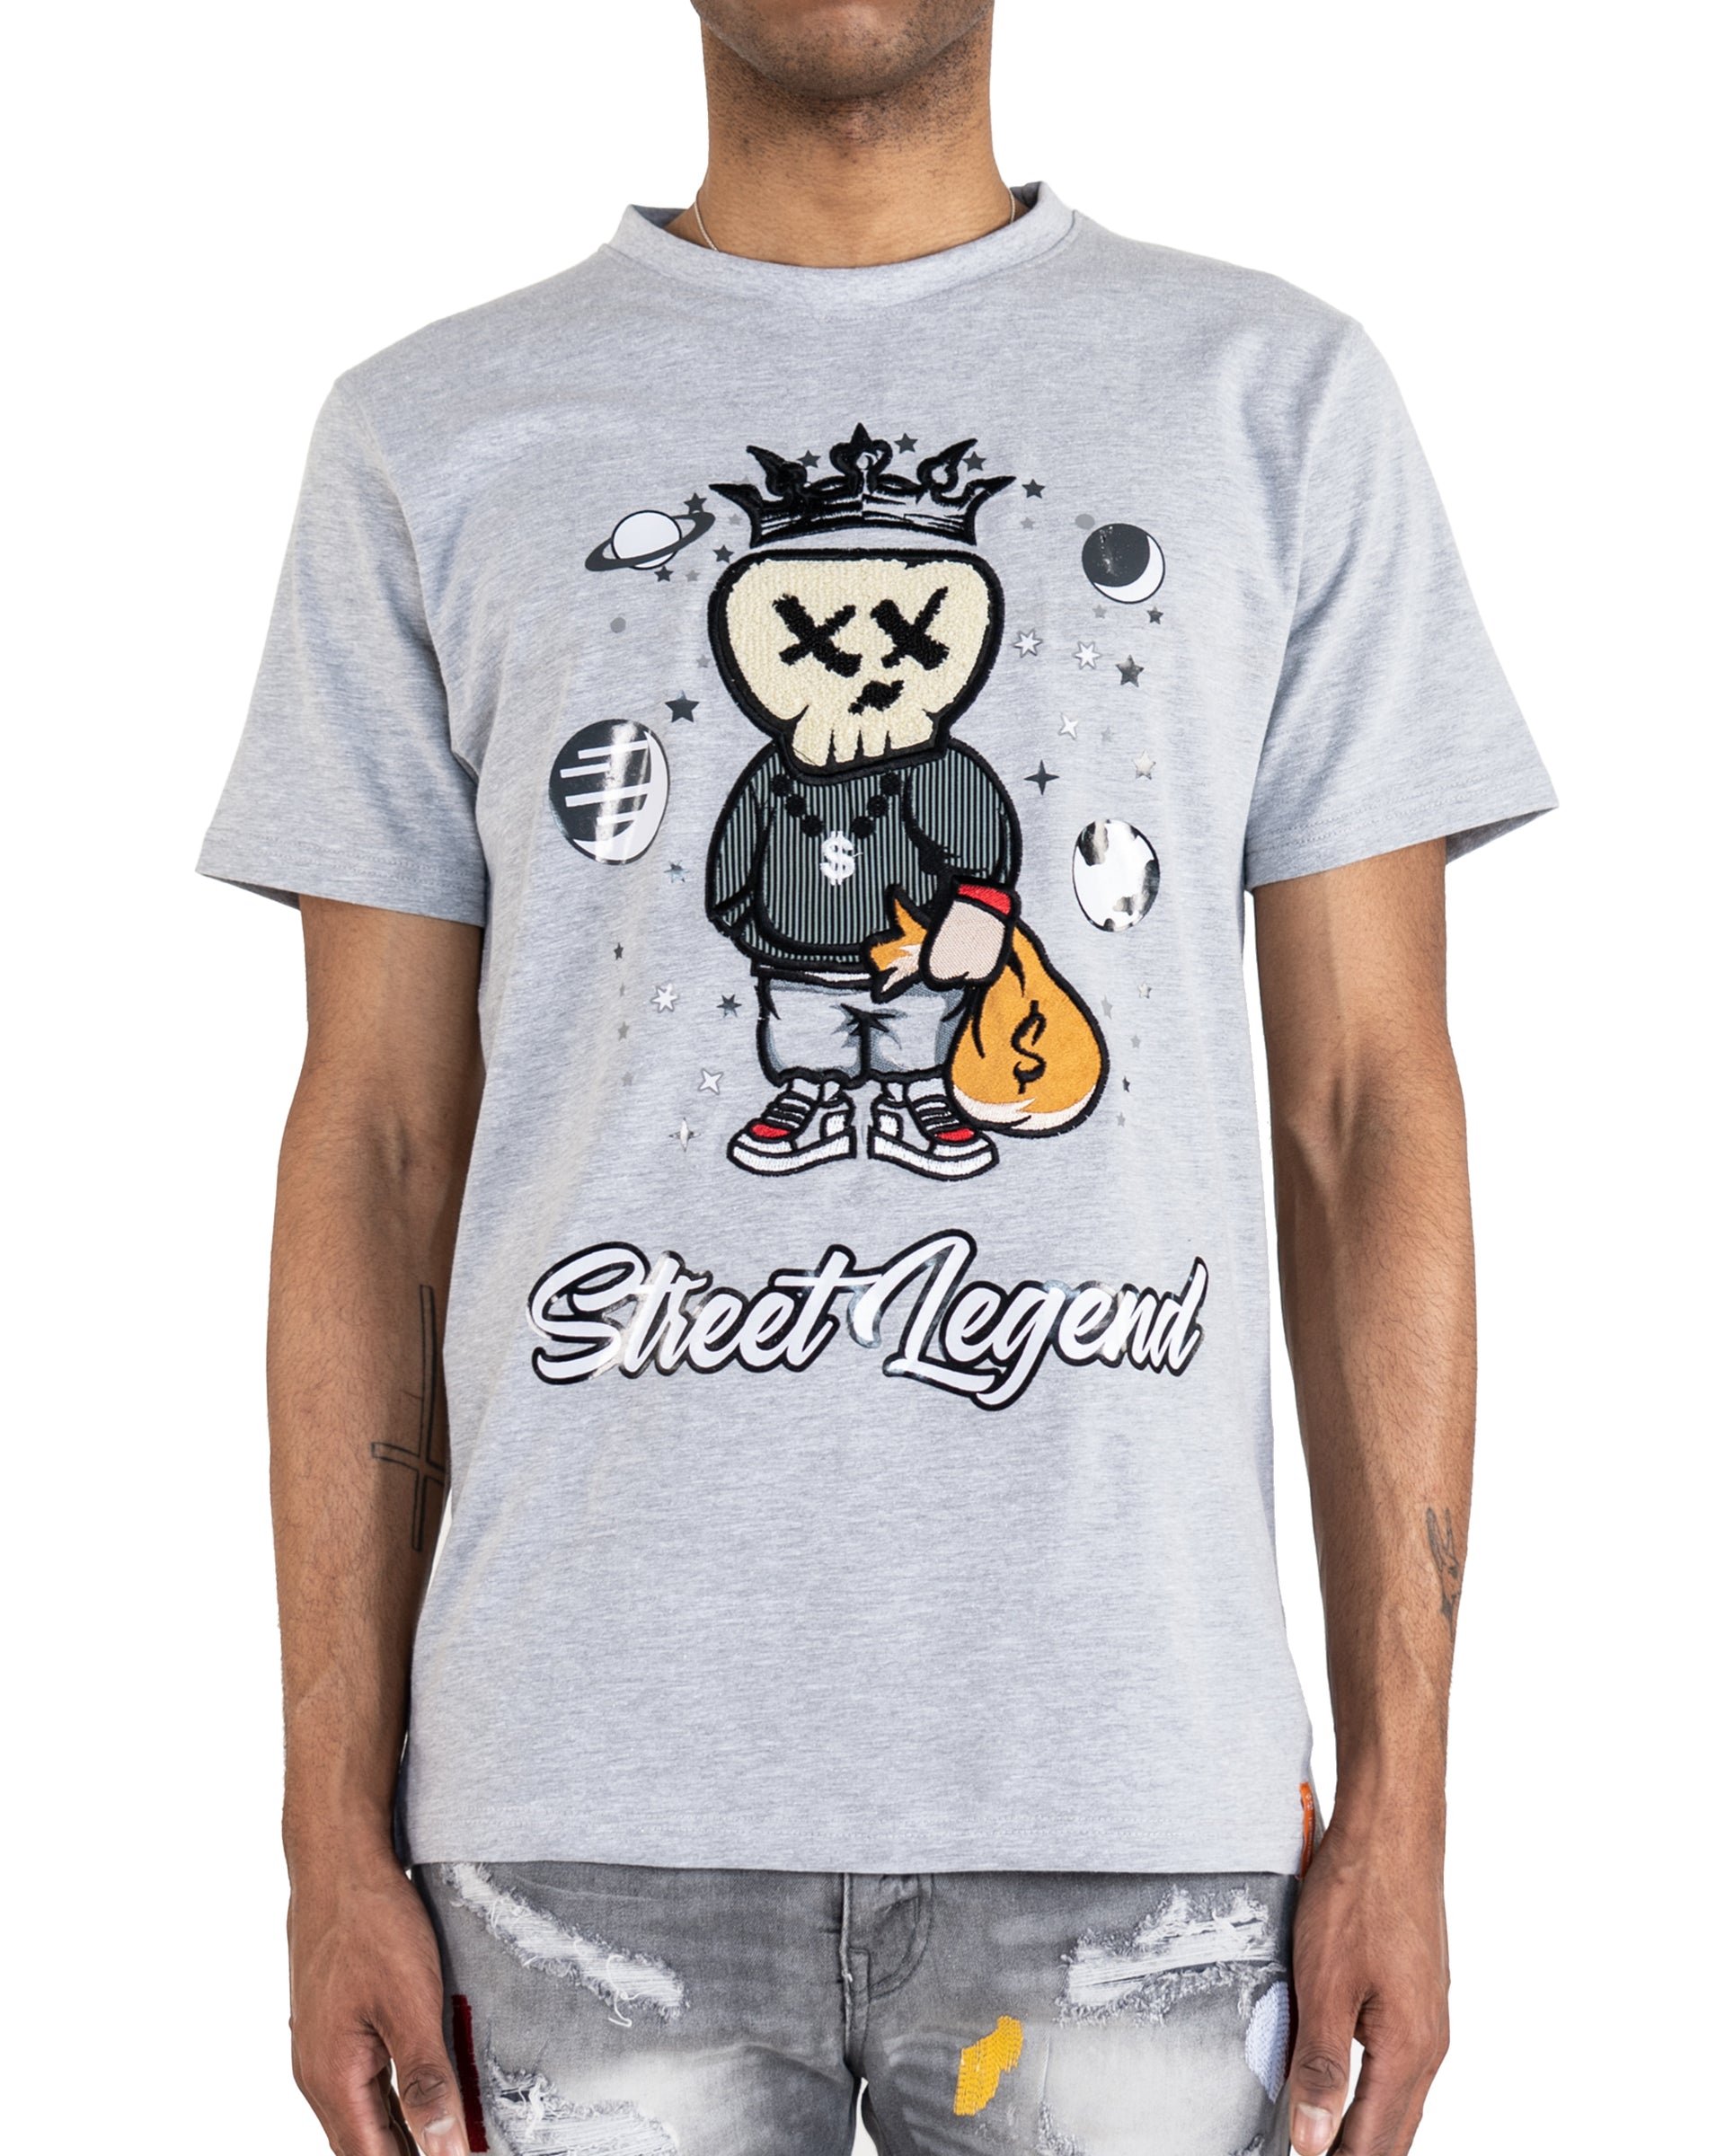 Men's "Street Legend" Graphic T-Shirt | Heather Grey